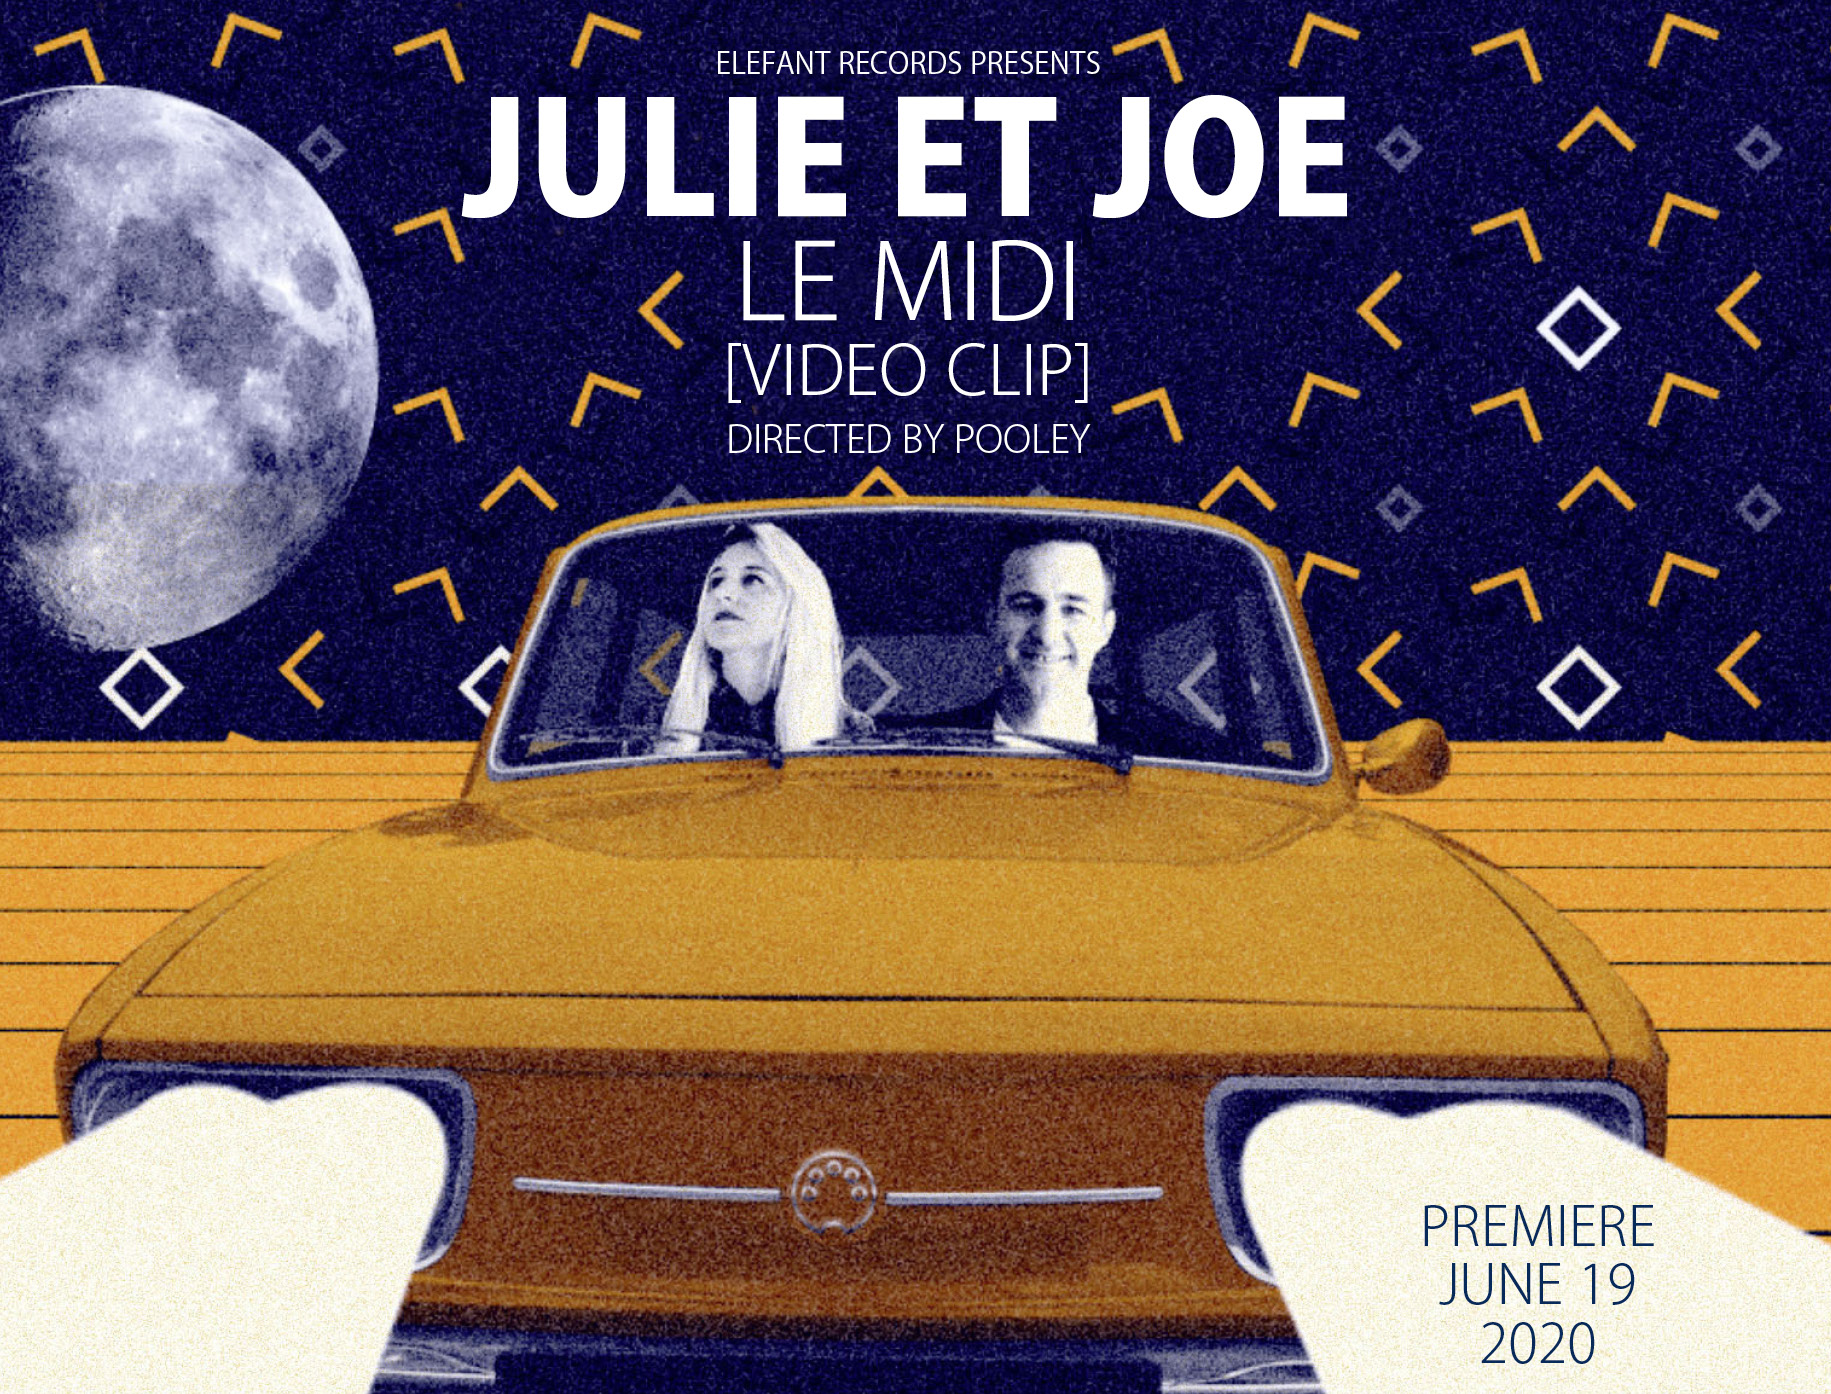 Julie Et Joe "Le Midi"